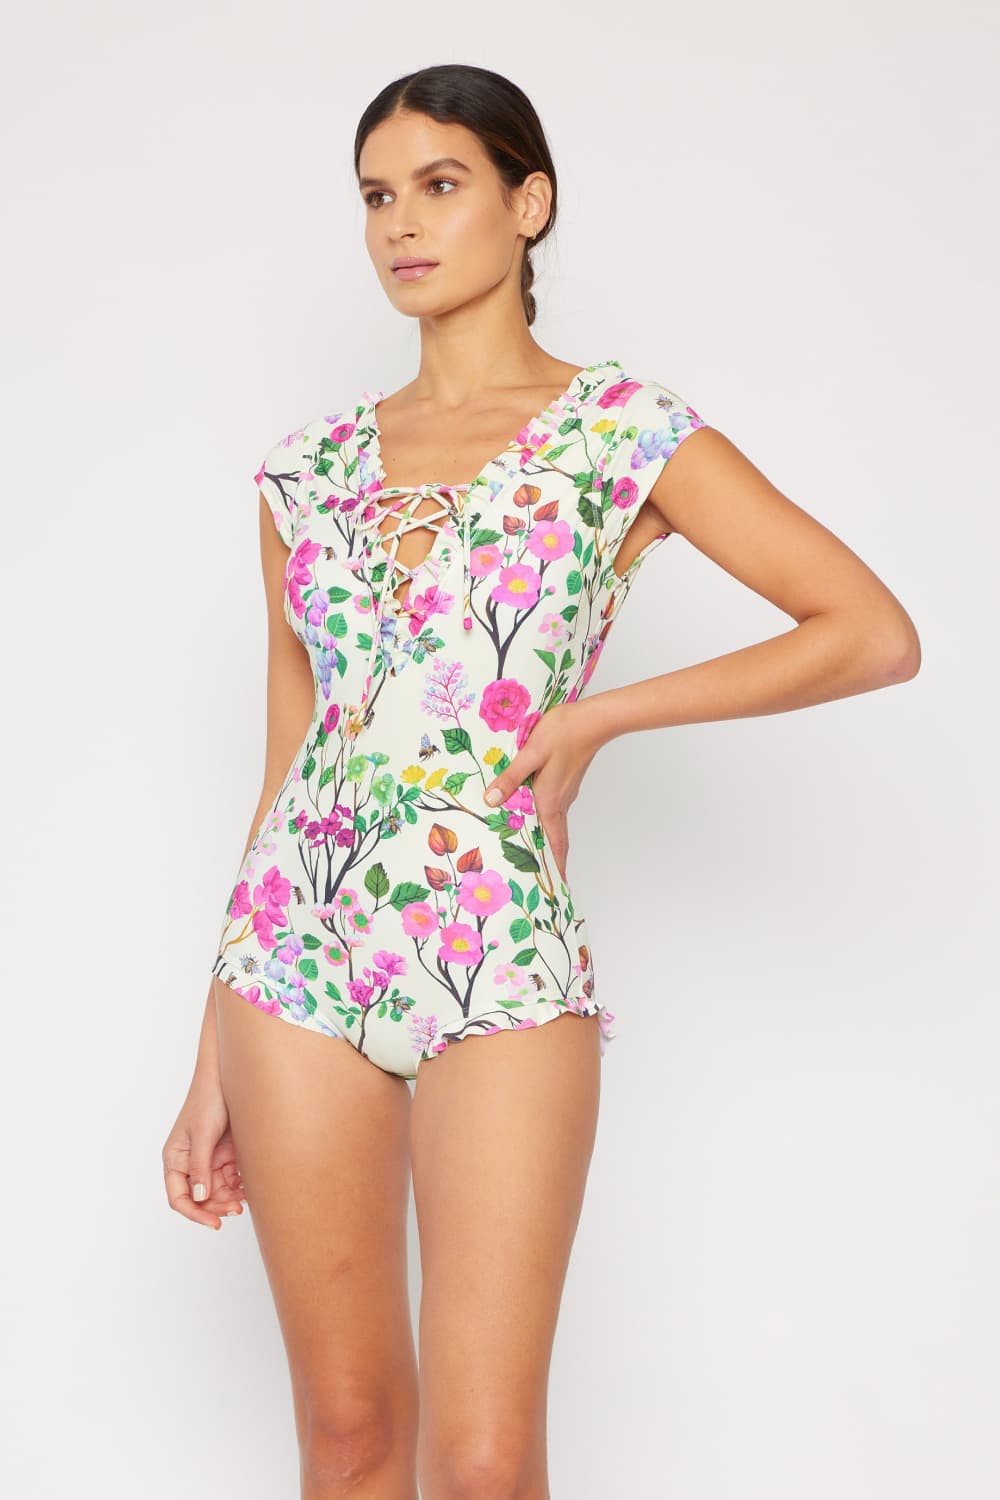 Marina West Swim Bring Me Flowers V-Neck One Piece Swimsuit Cherry Blossom Cream | - CHANELIA